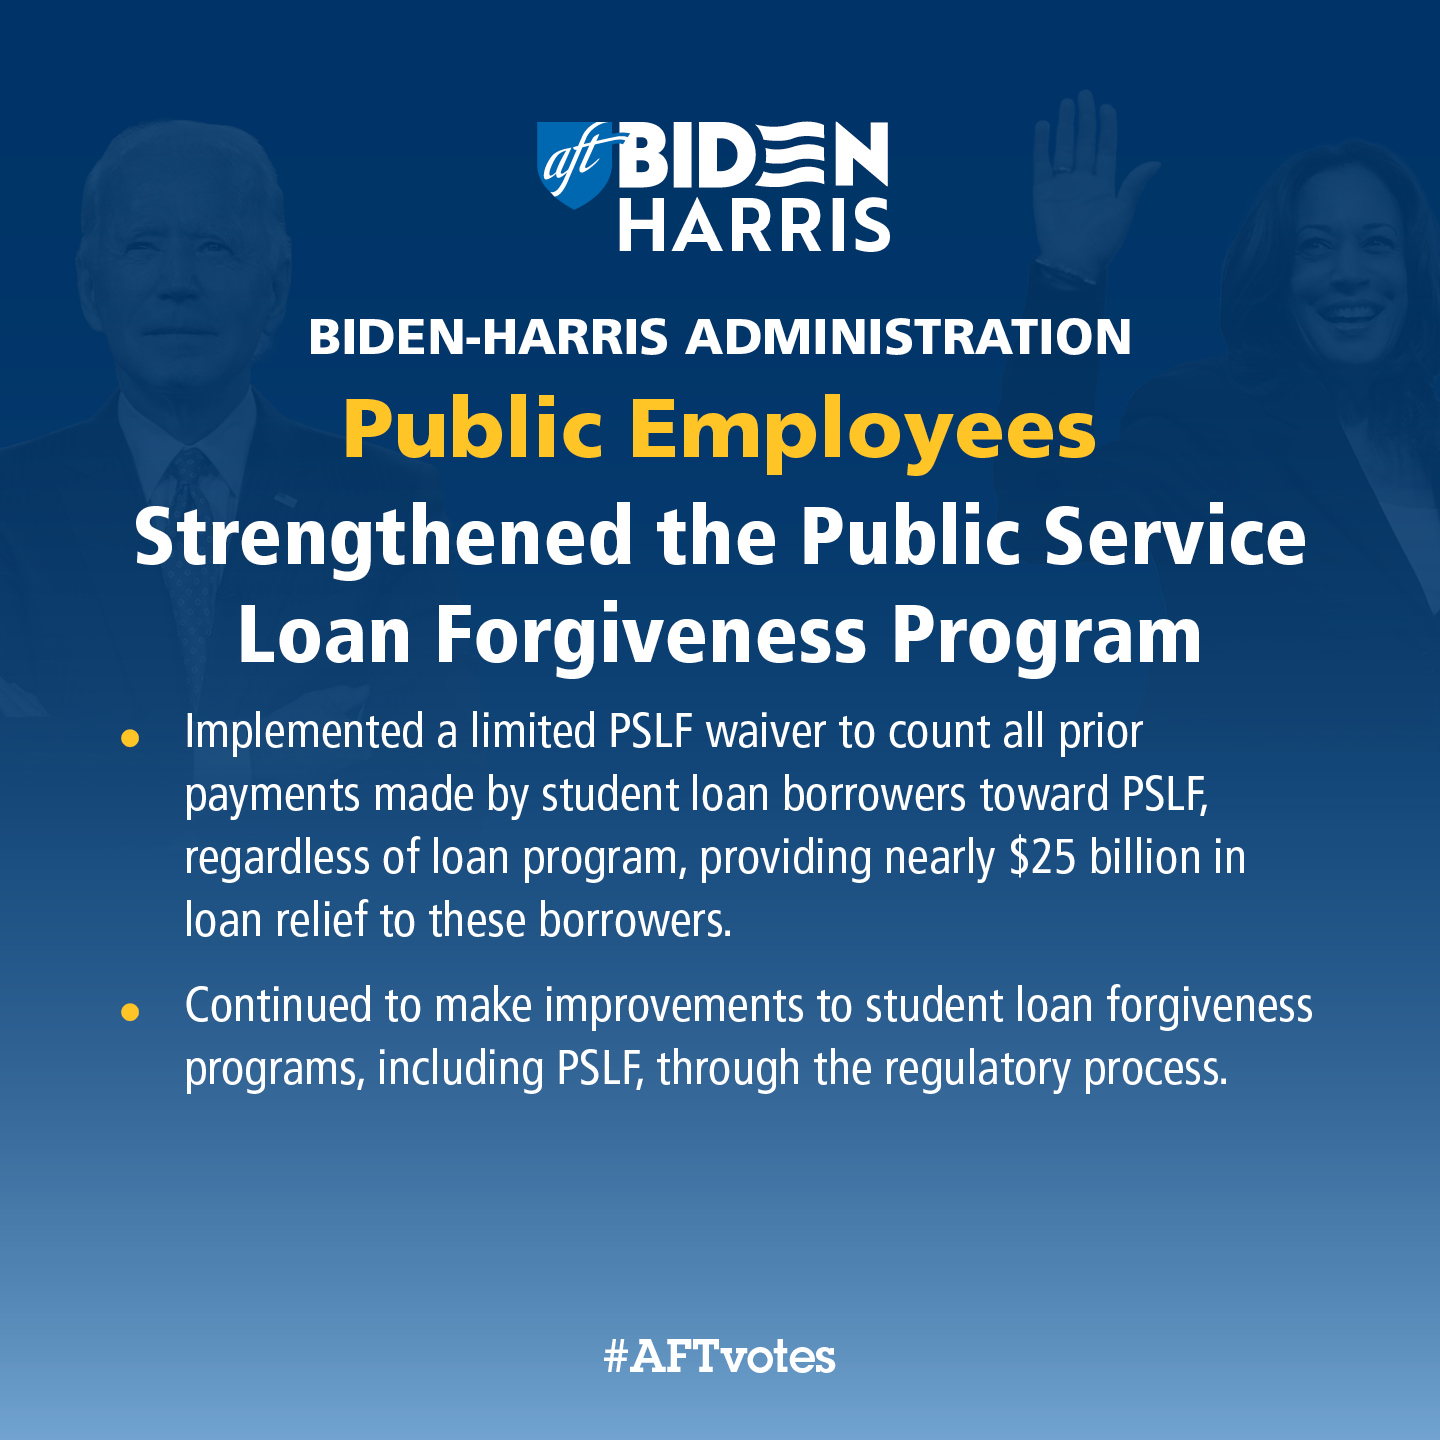 Strengthened the Public Service Student Loan Forgiveness Program